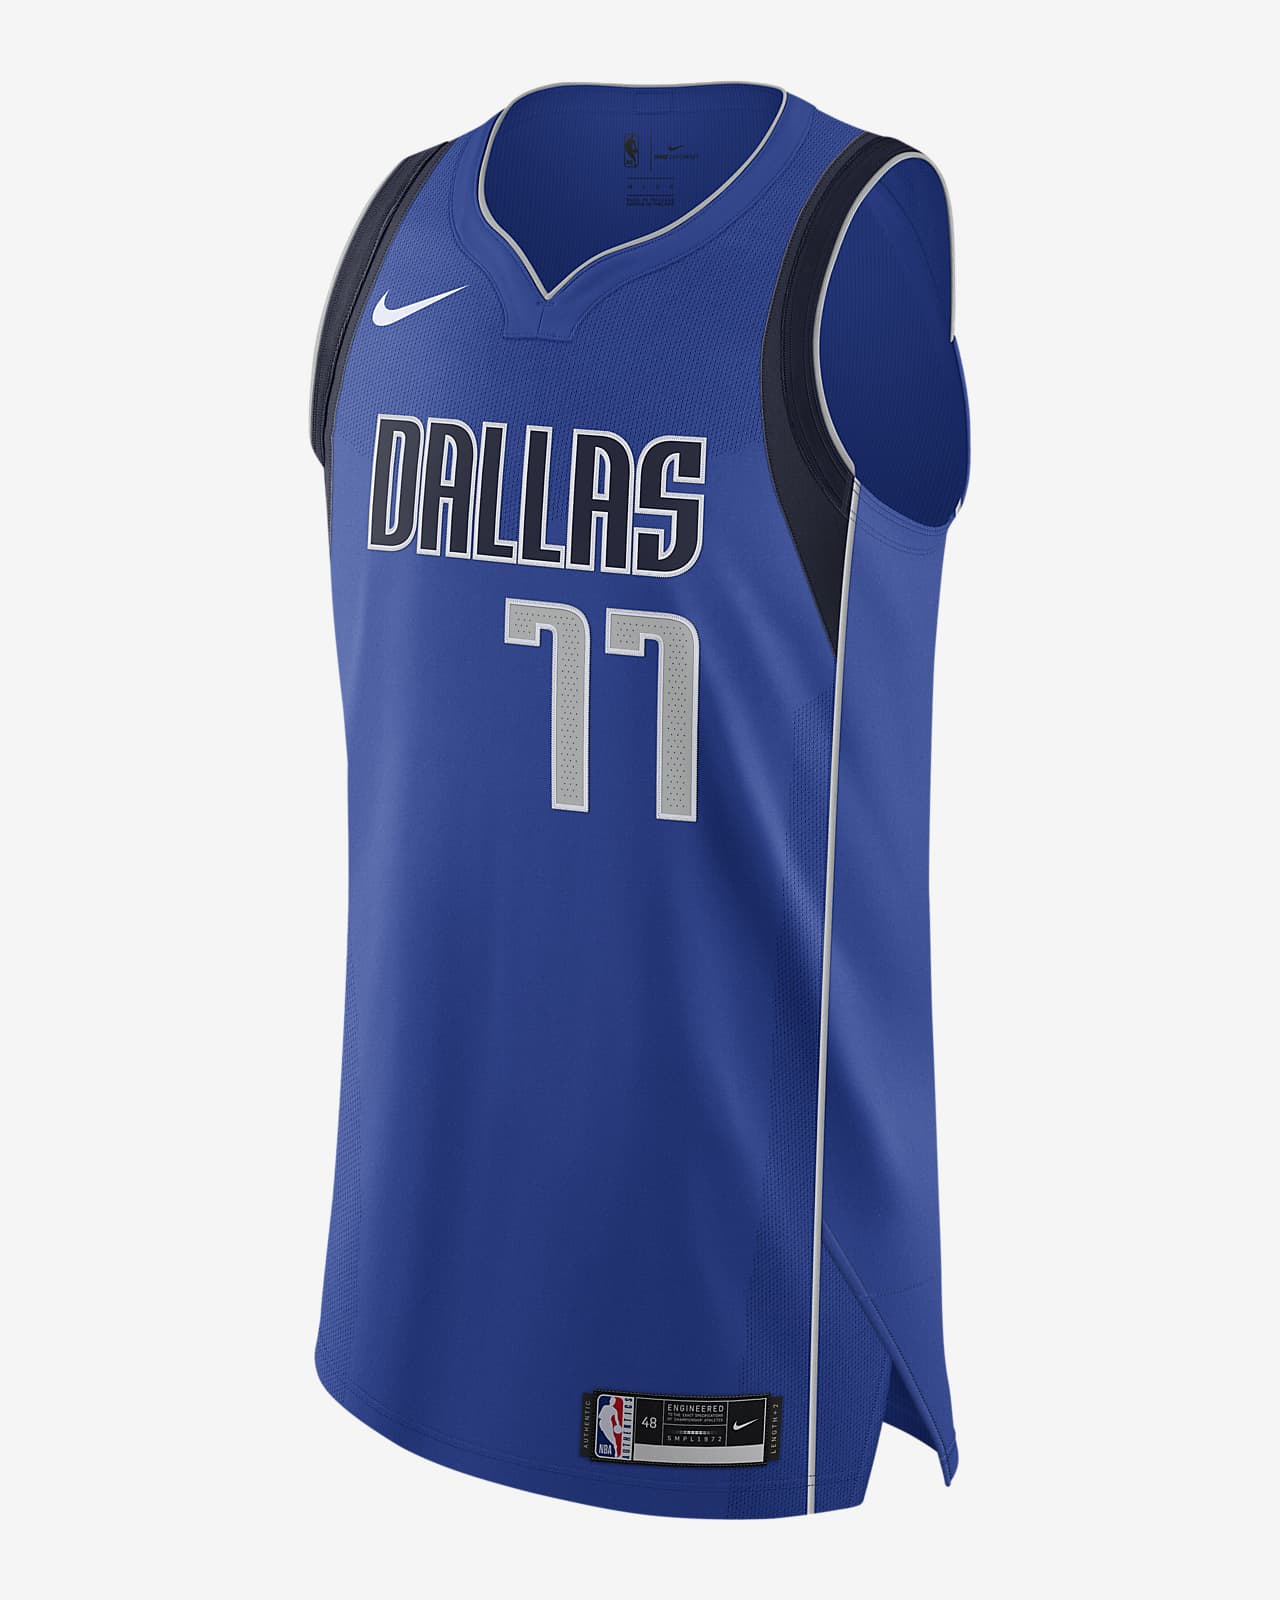 Luka Doncic Mavericks Icon Edition 2020 Men's Nike NBA Authentic Jersey